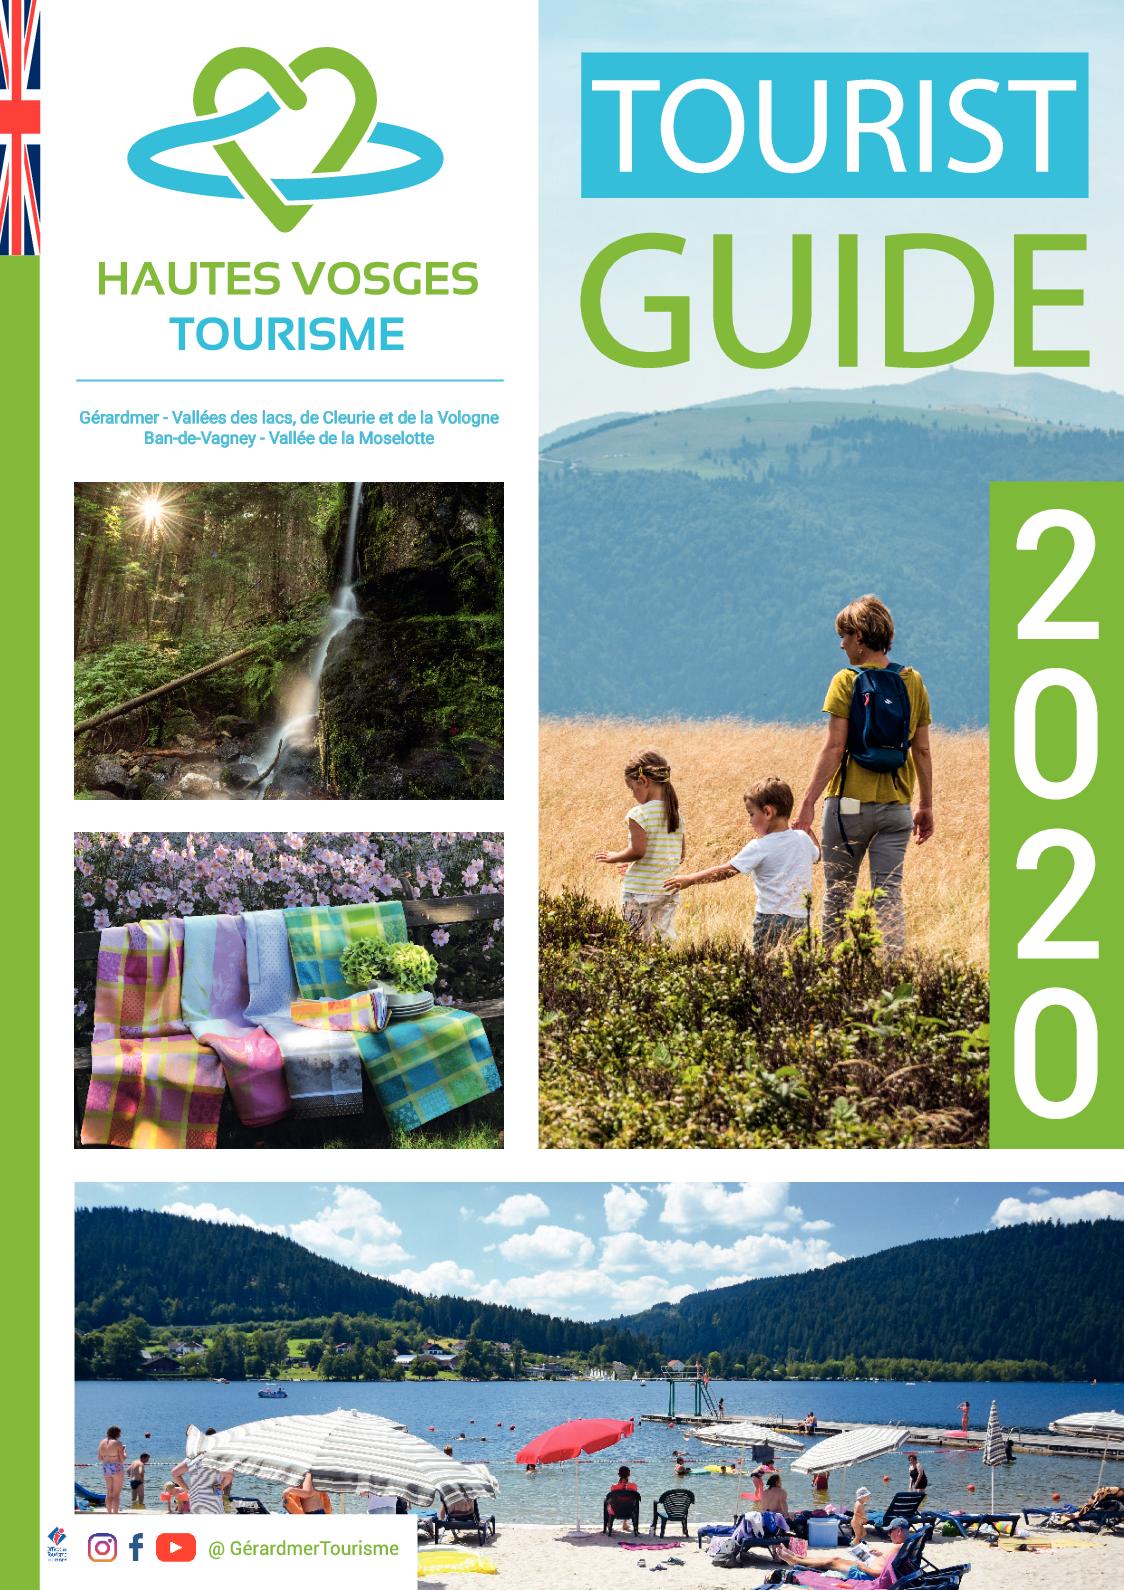 Salon De Jardin Super U Inspirant Calaméo tourist Guide 2020 Hautes Vosges